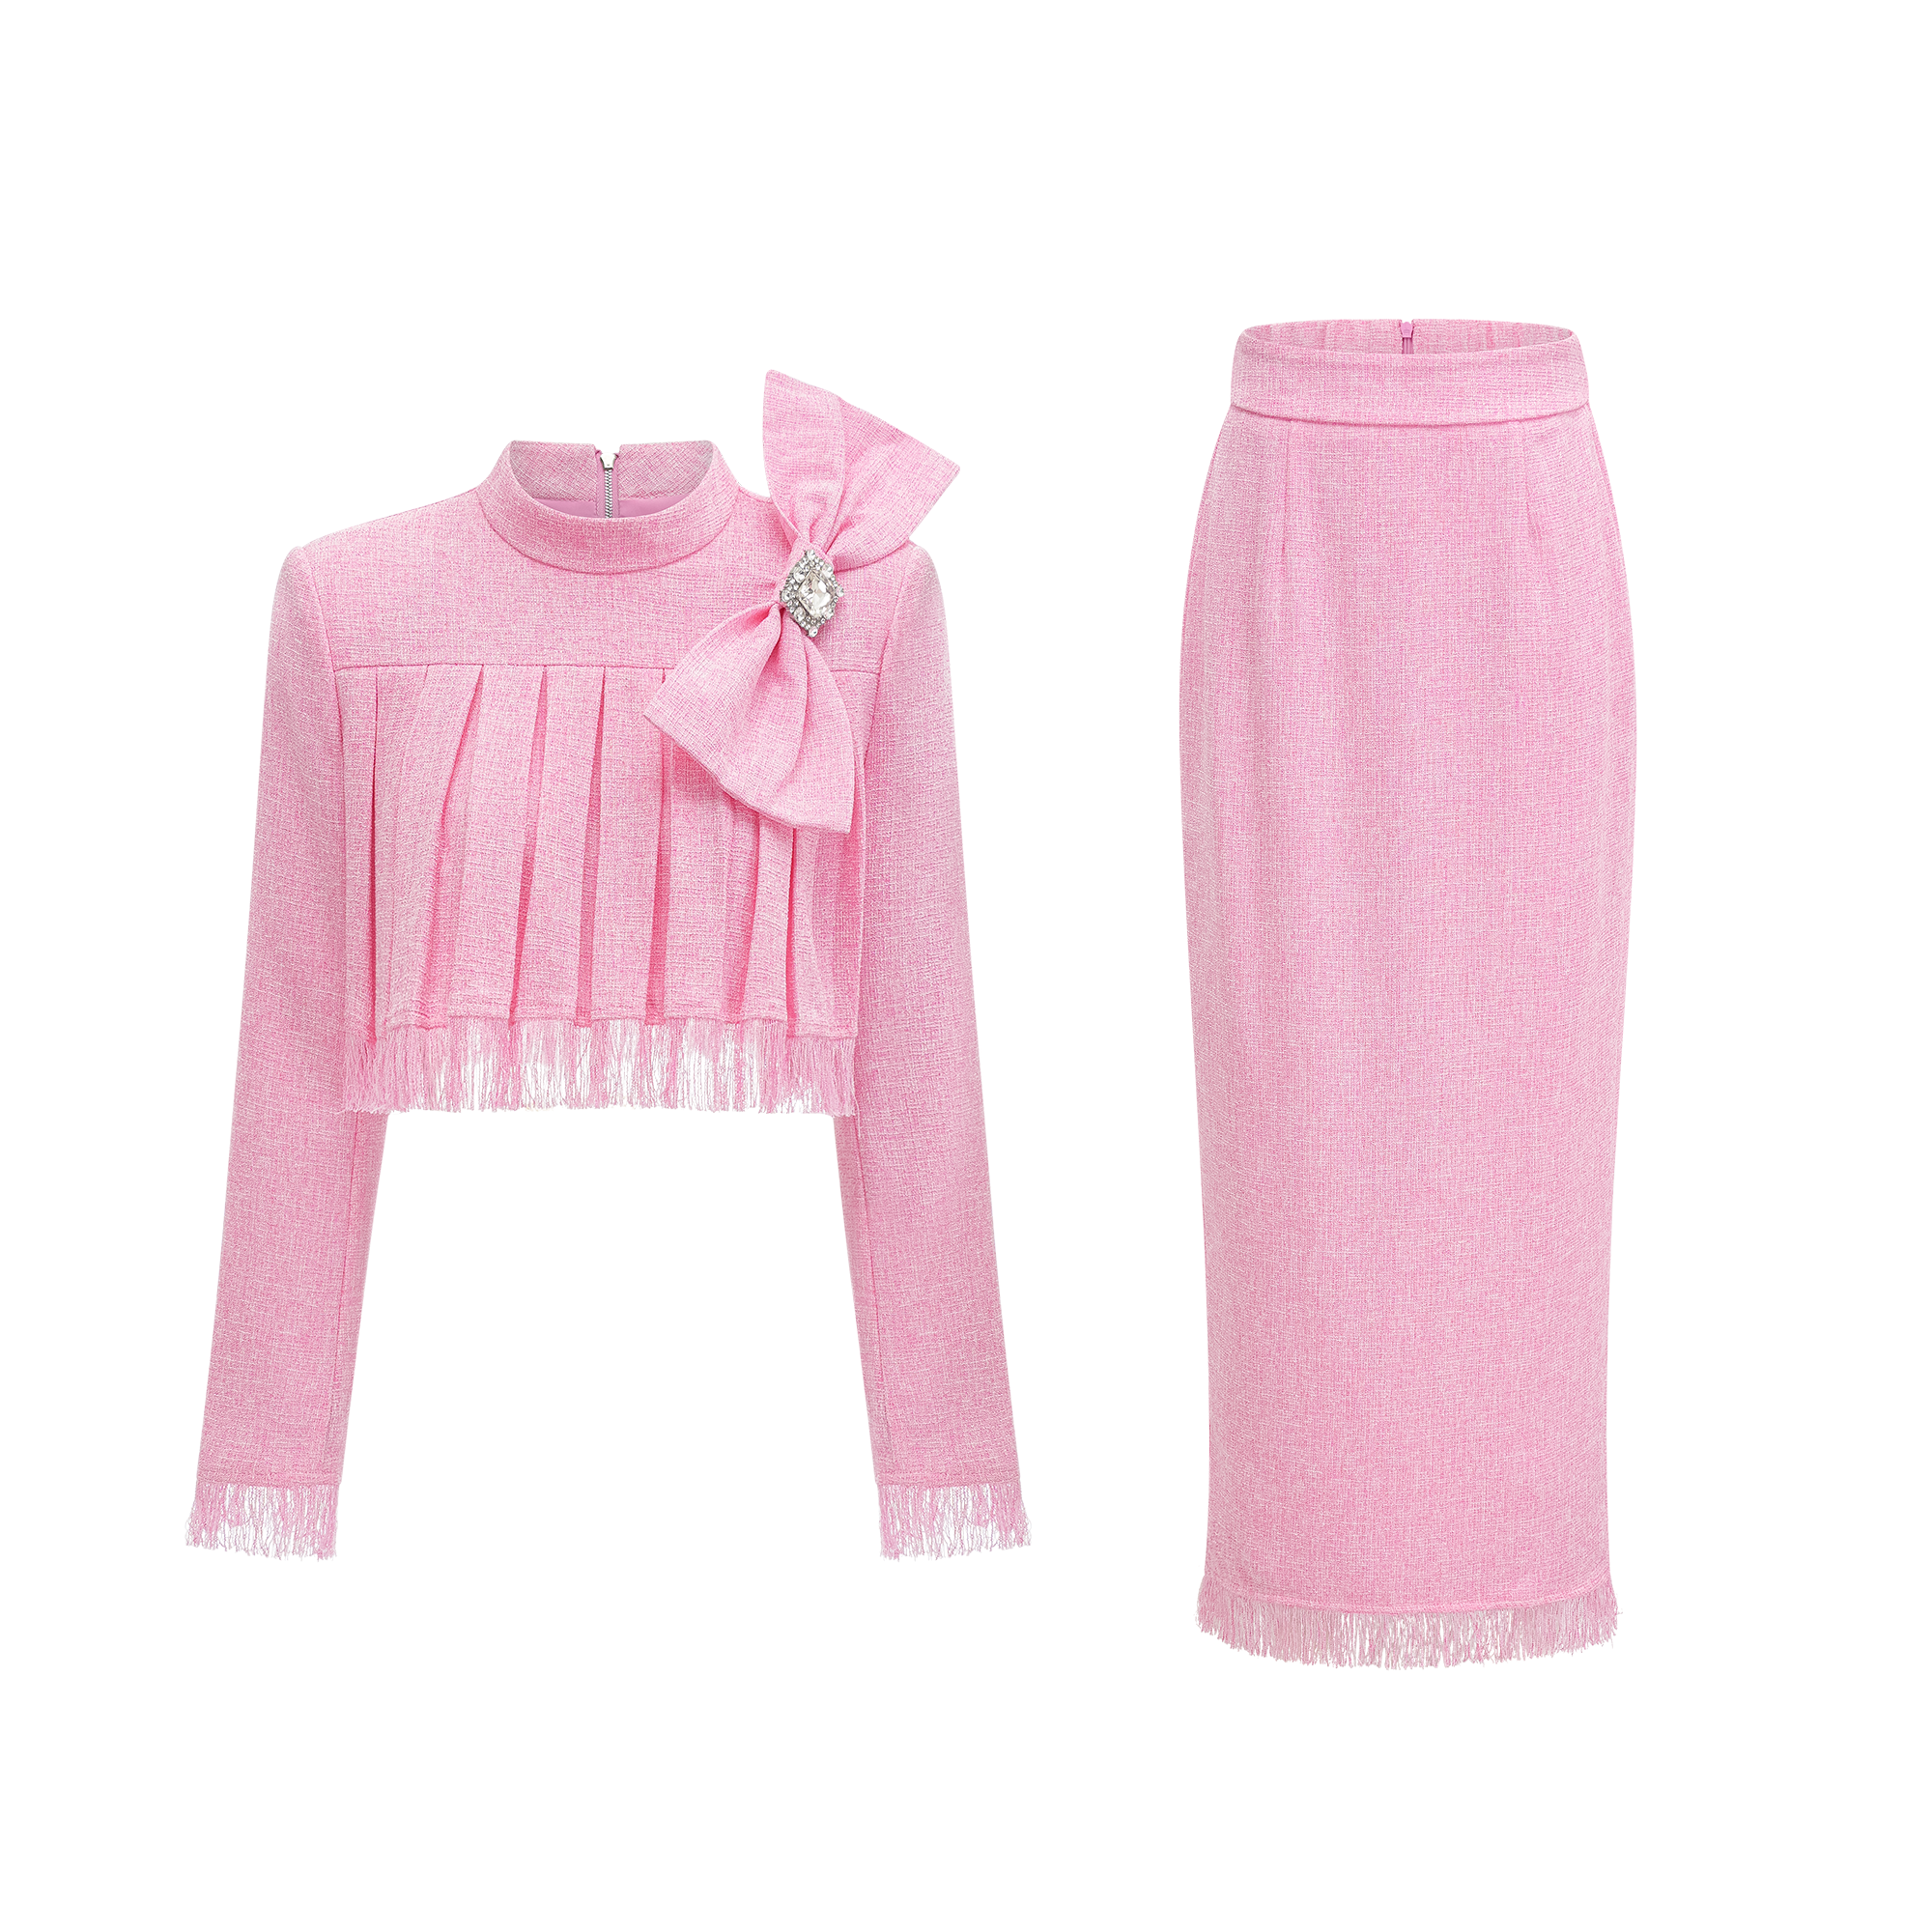 Gabrielle tassel-trim pleated top & skirt matching set